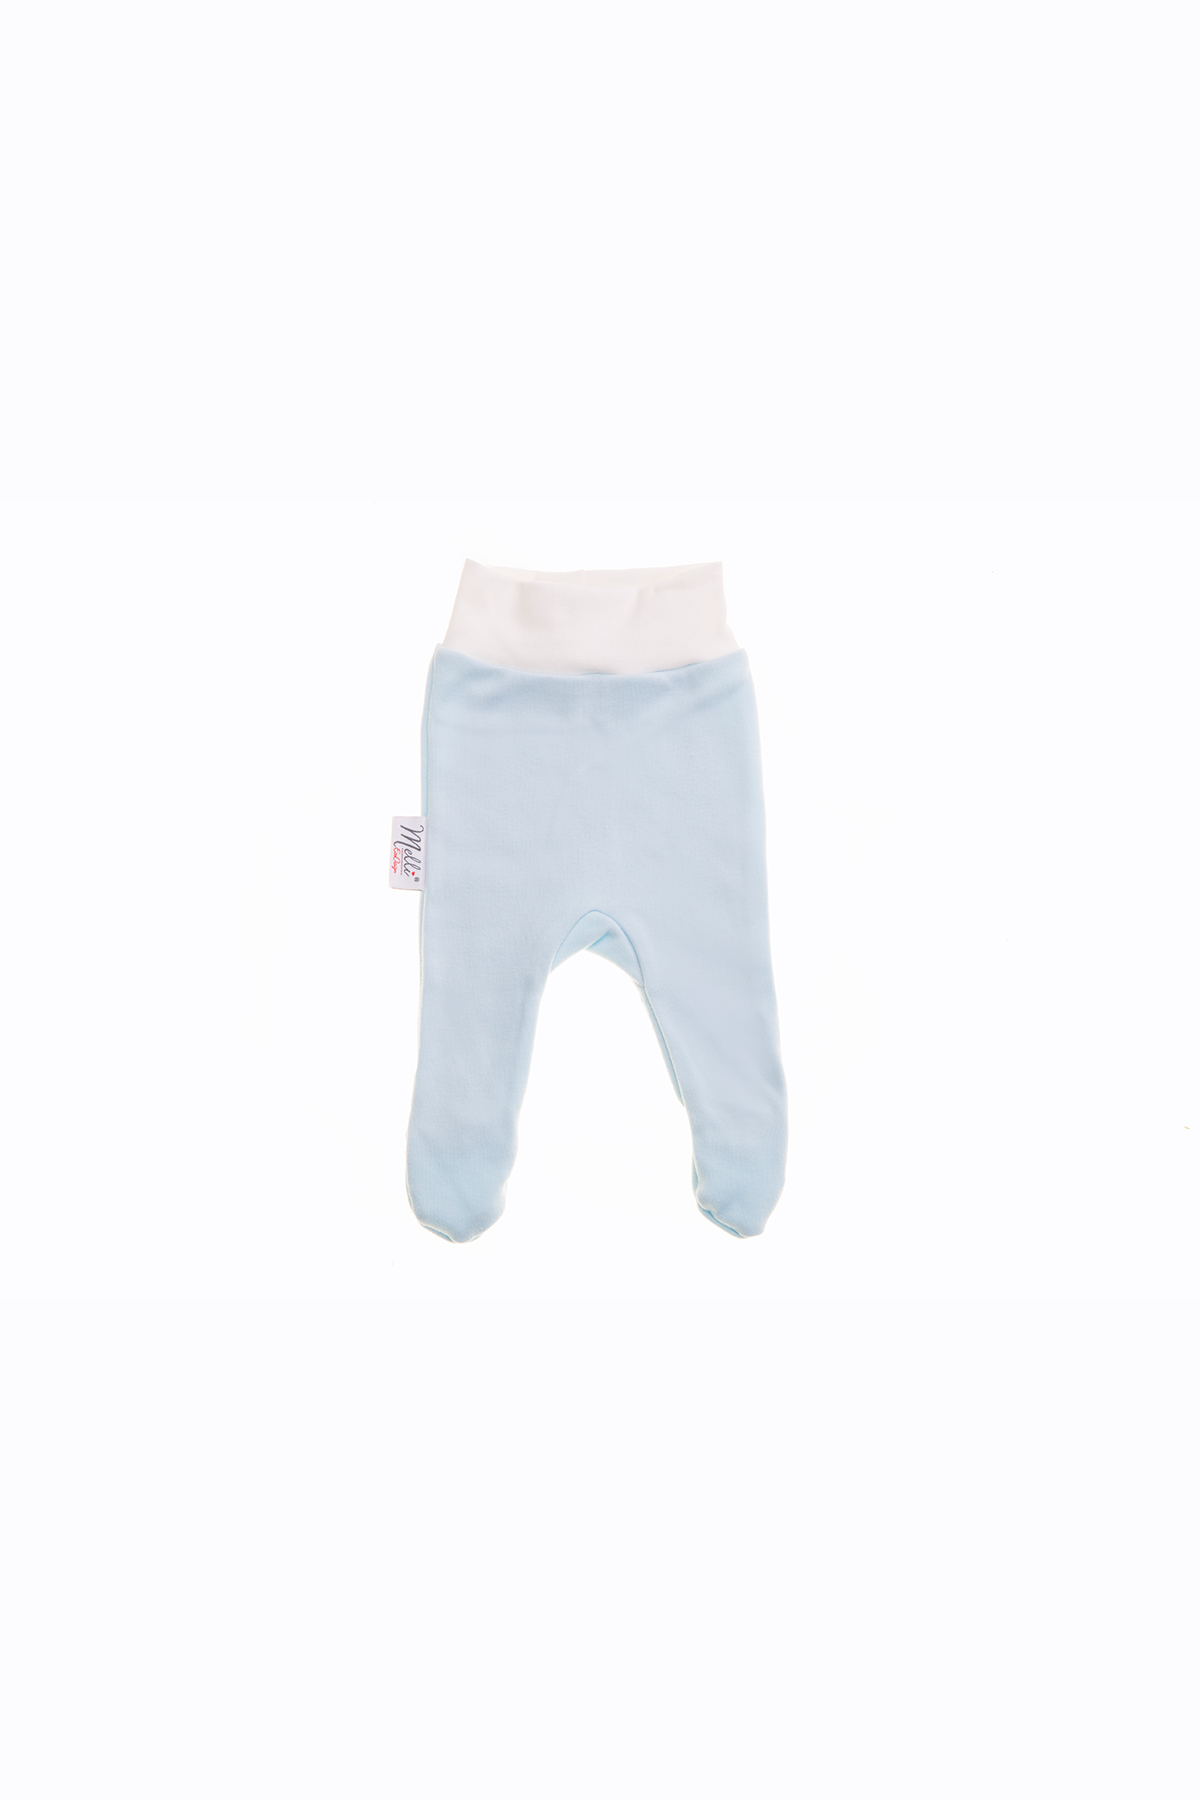 light blue baby pants